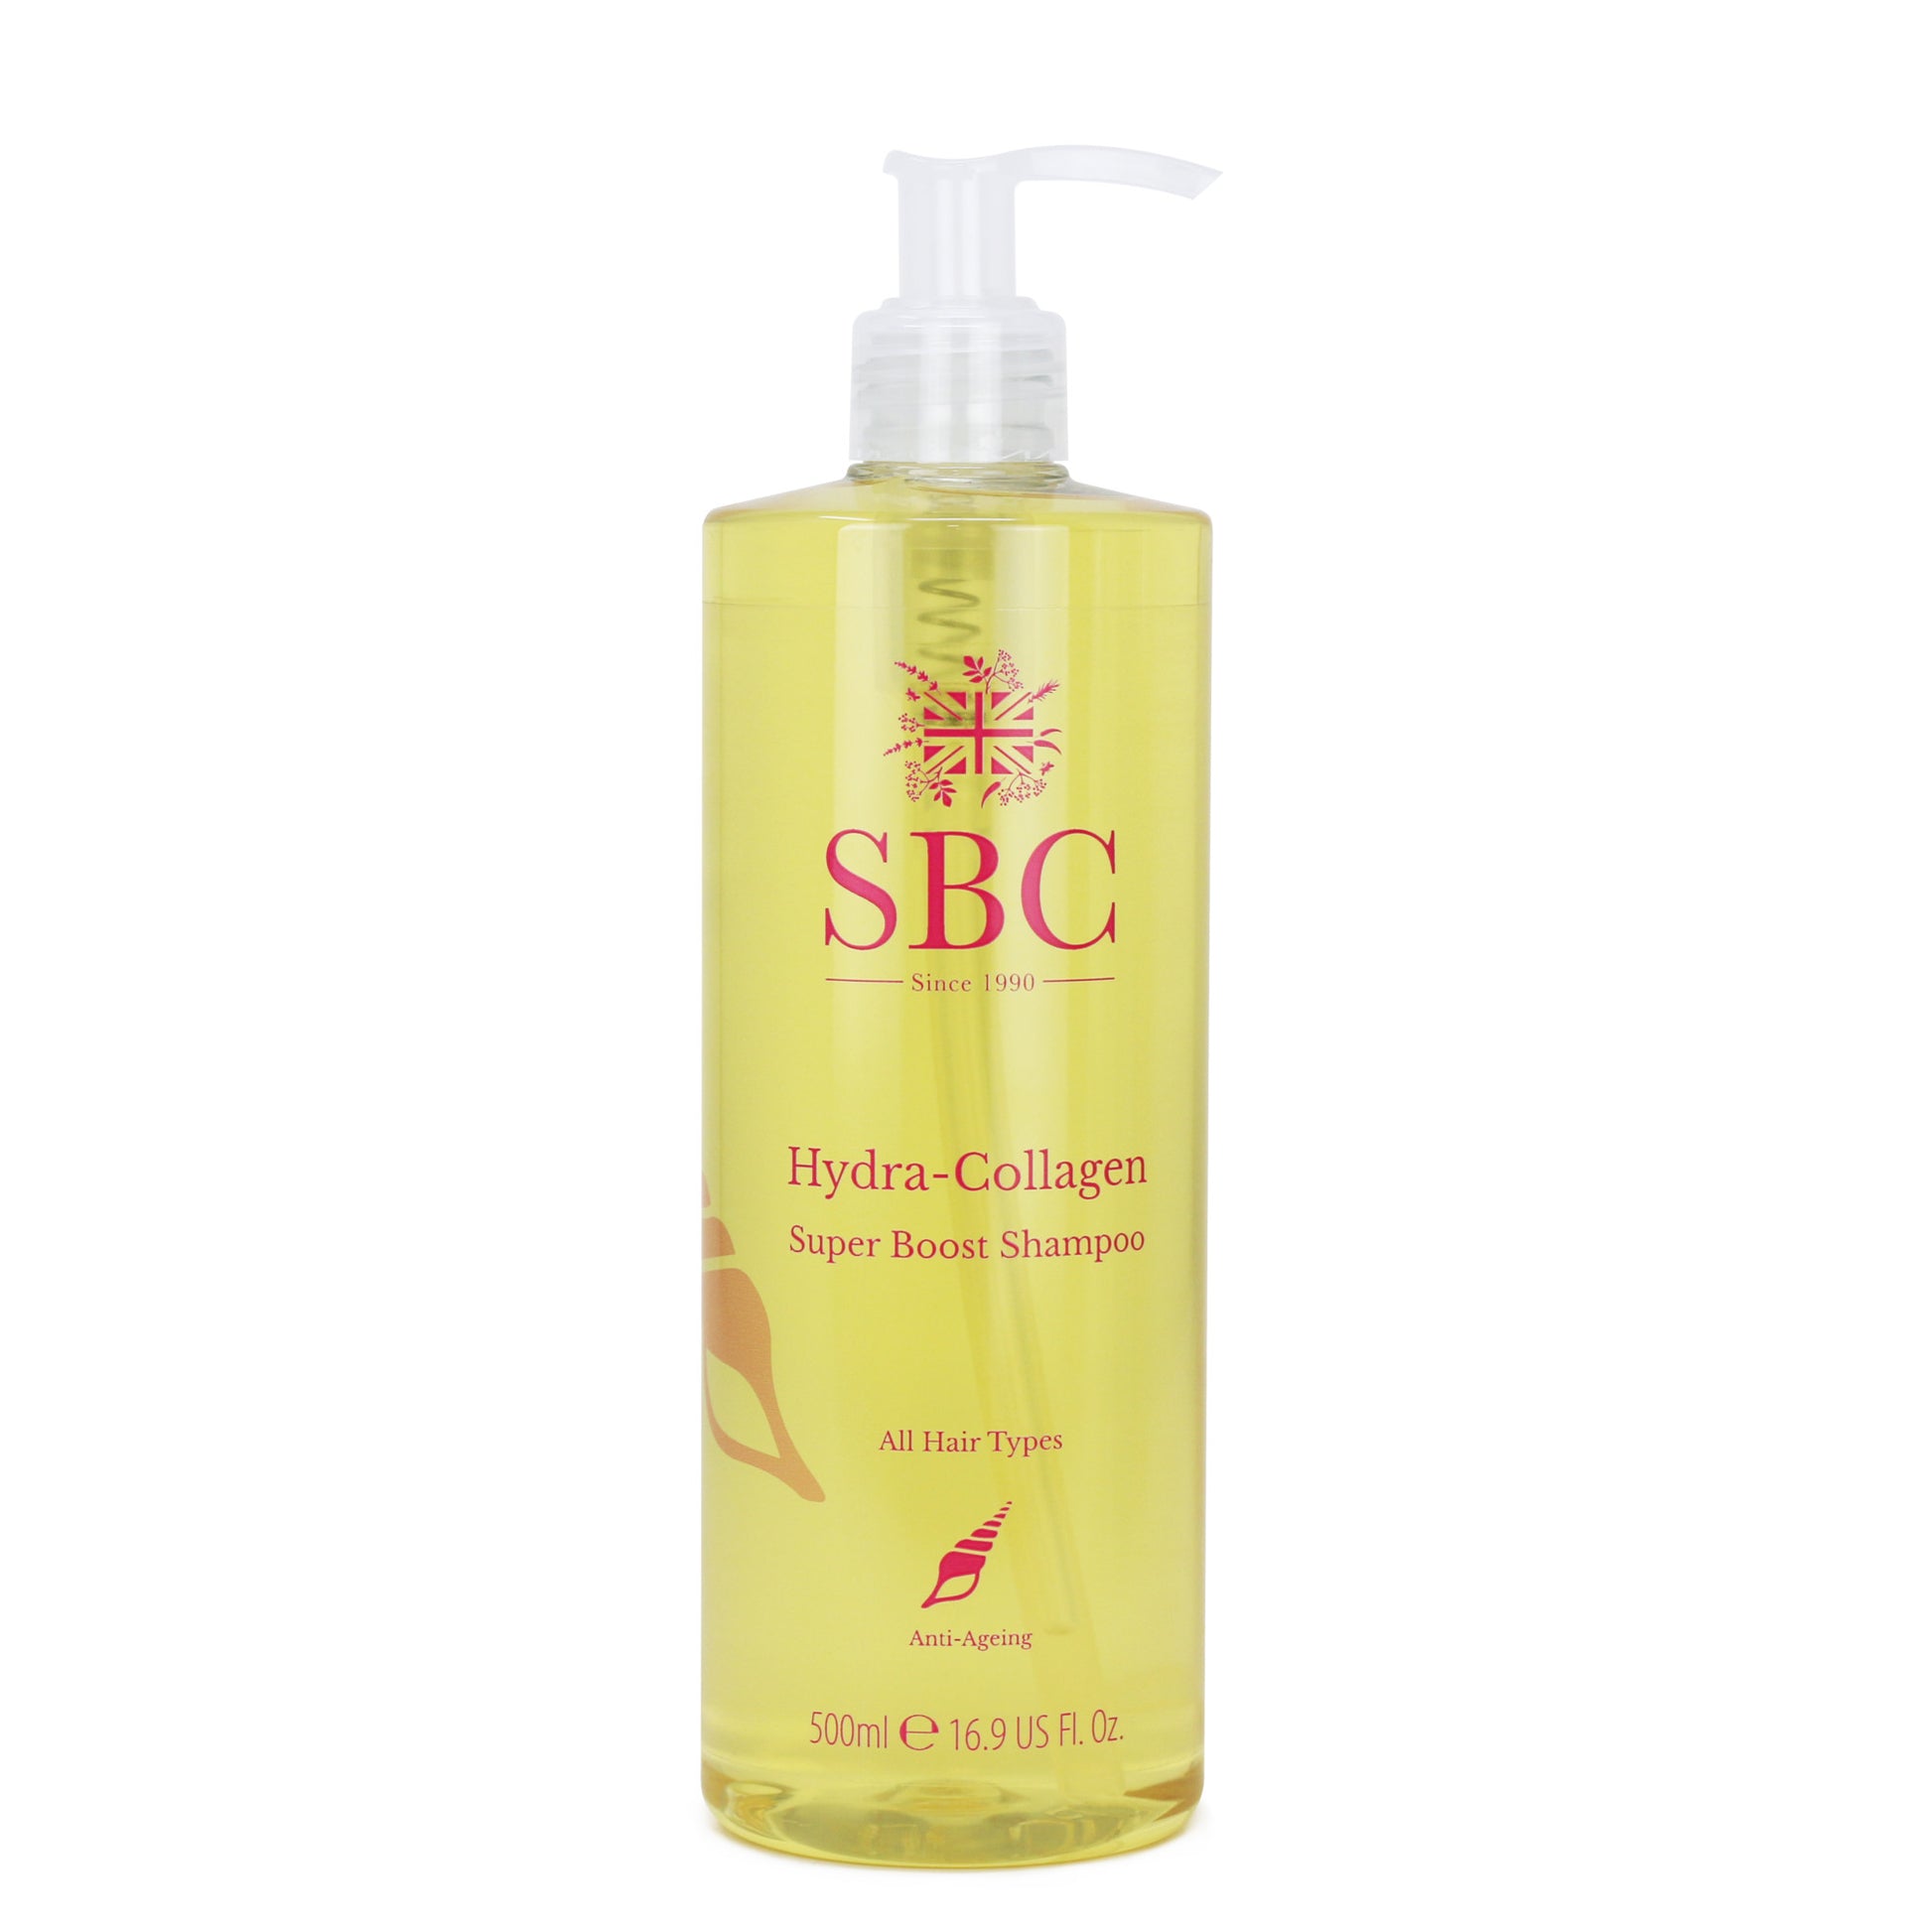 500ml Hydra-Collagen Super Boost Shampoo